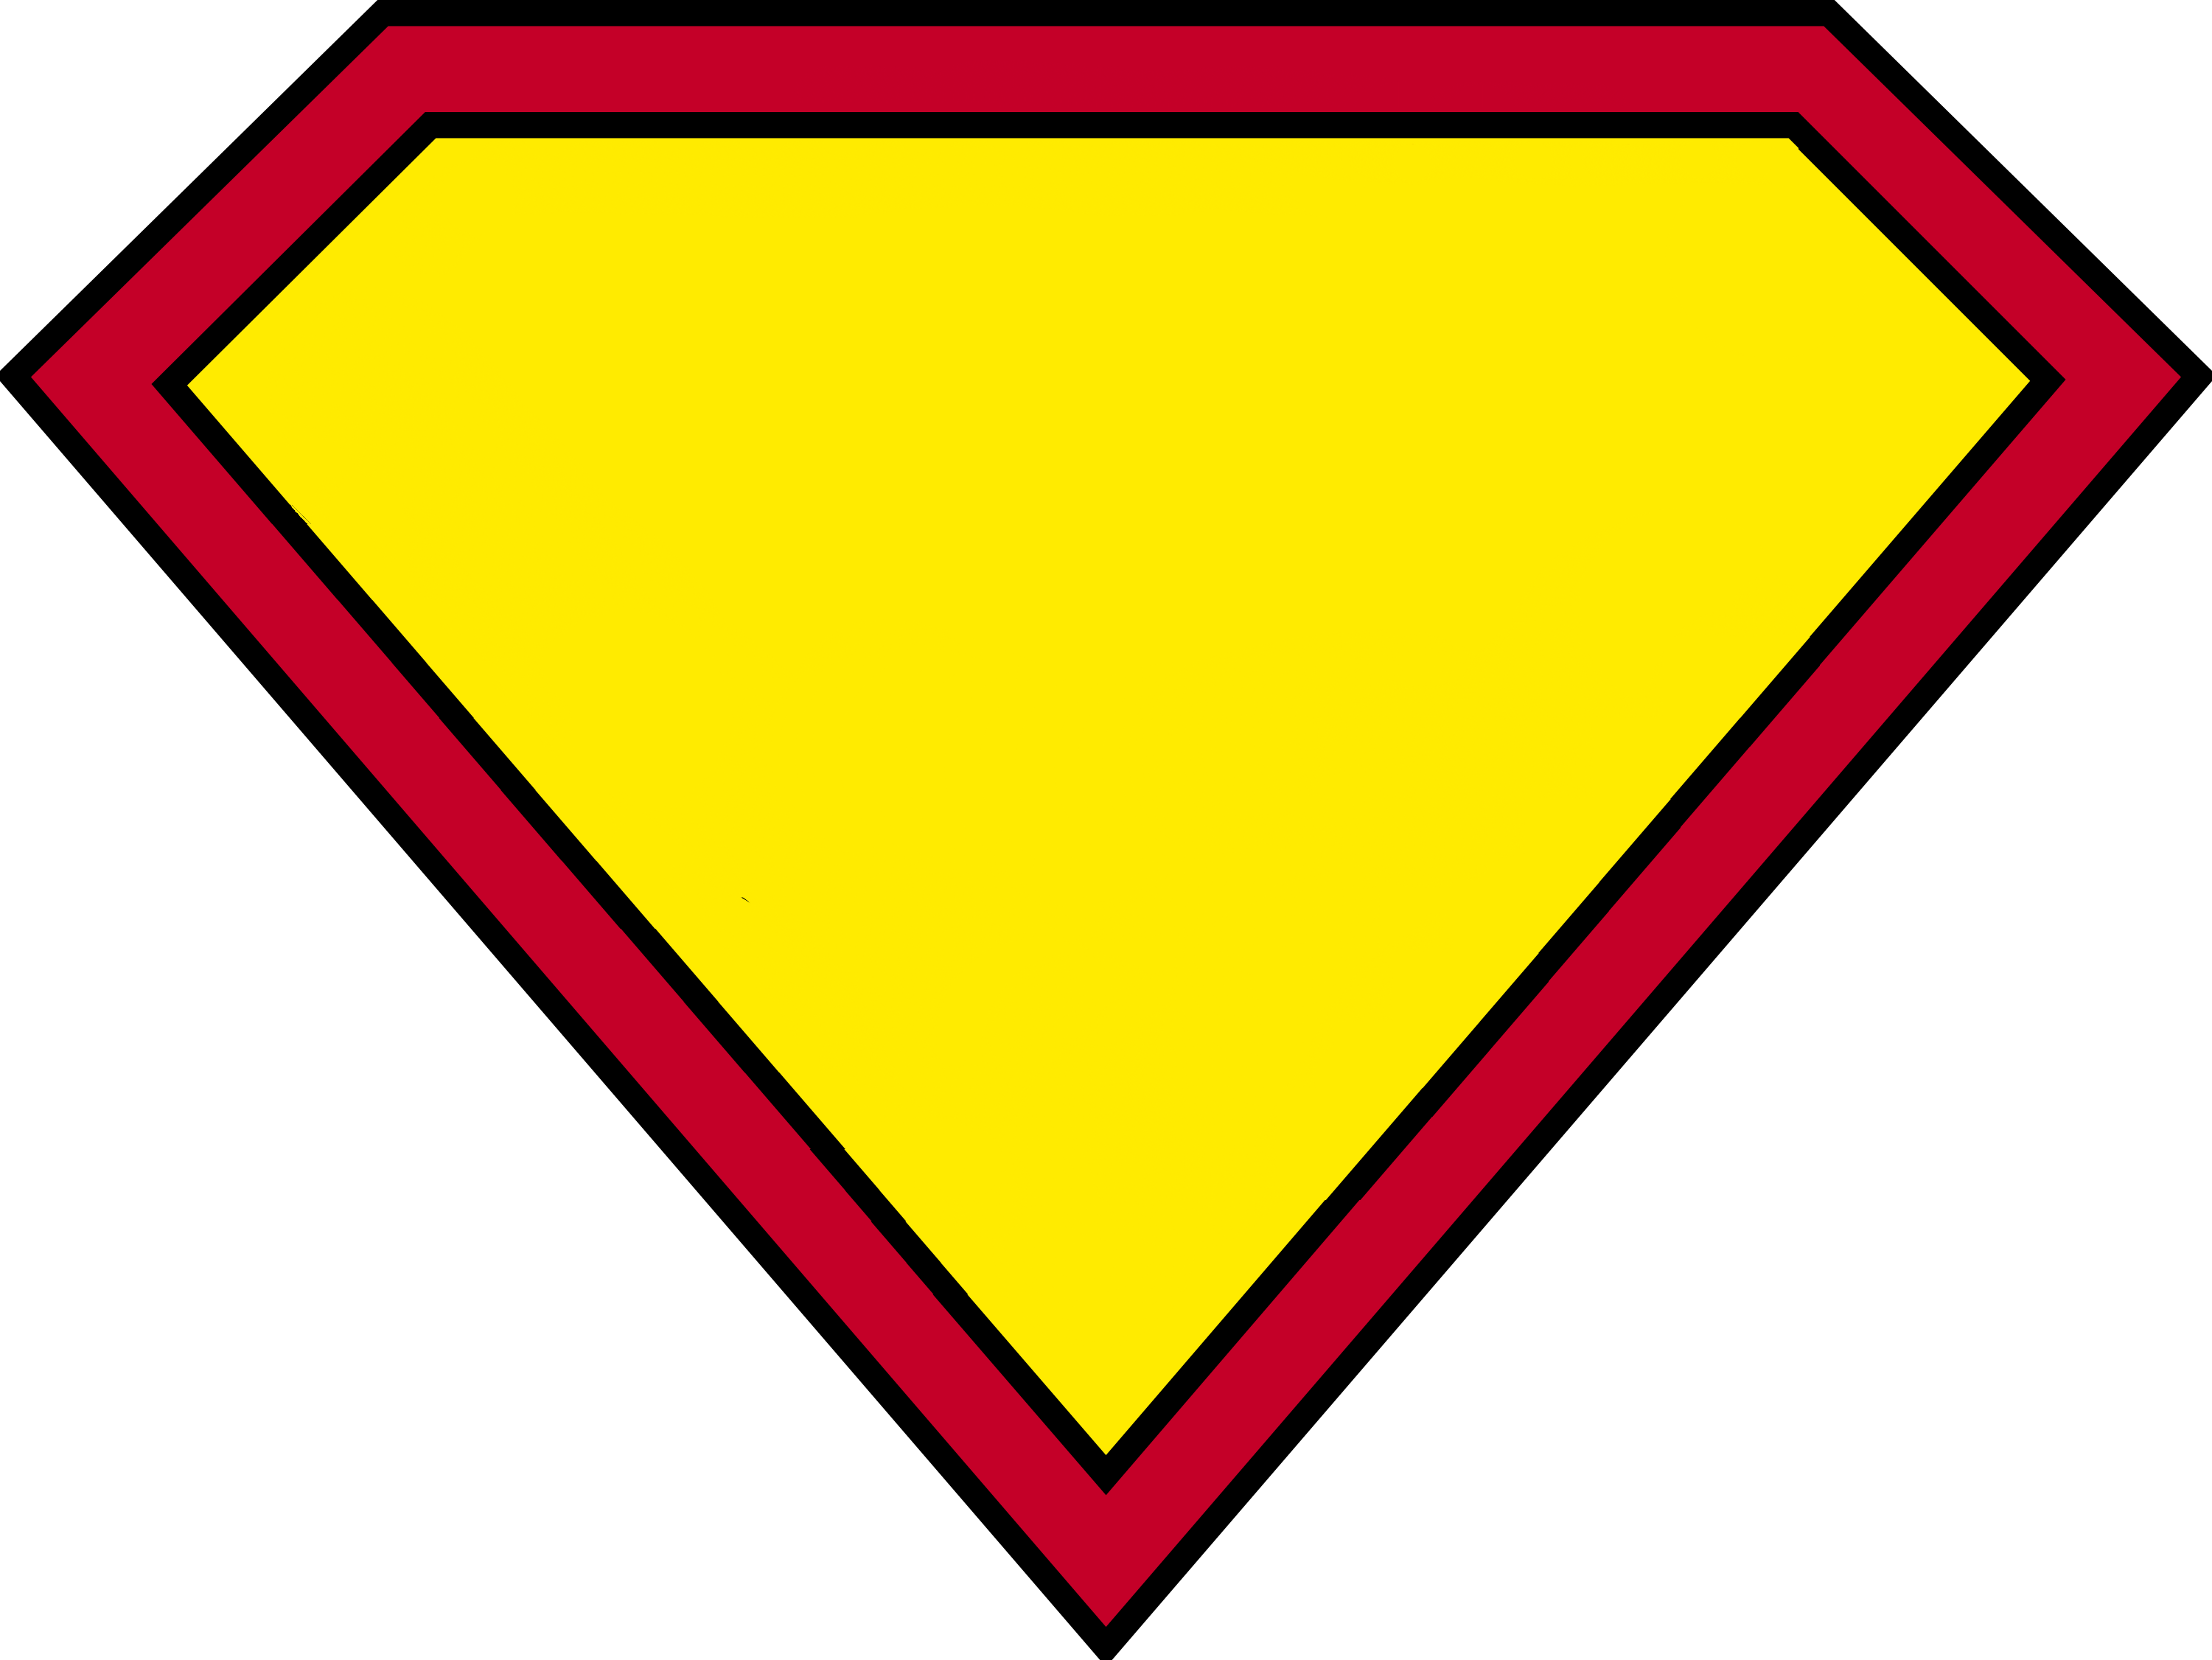 Superman Logo PNG Transparent Superman Logo.PNG Images. PlusPNG